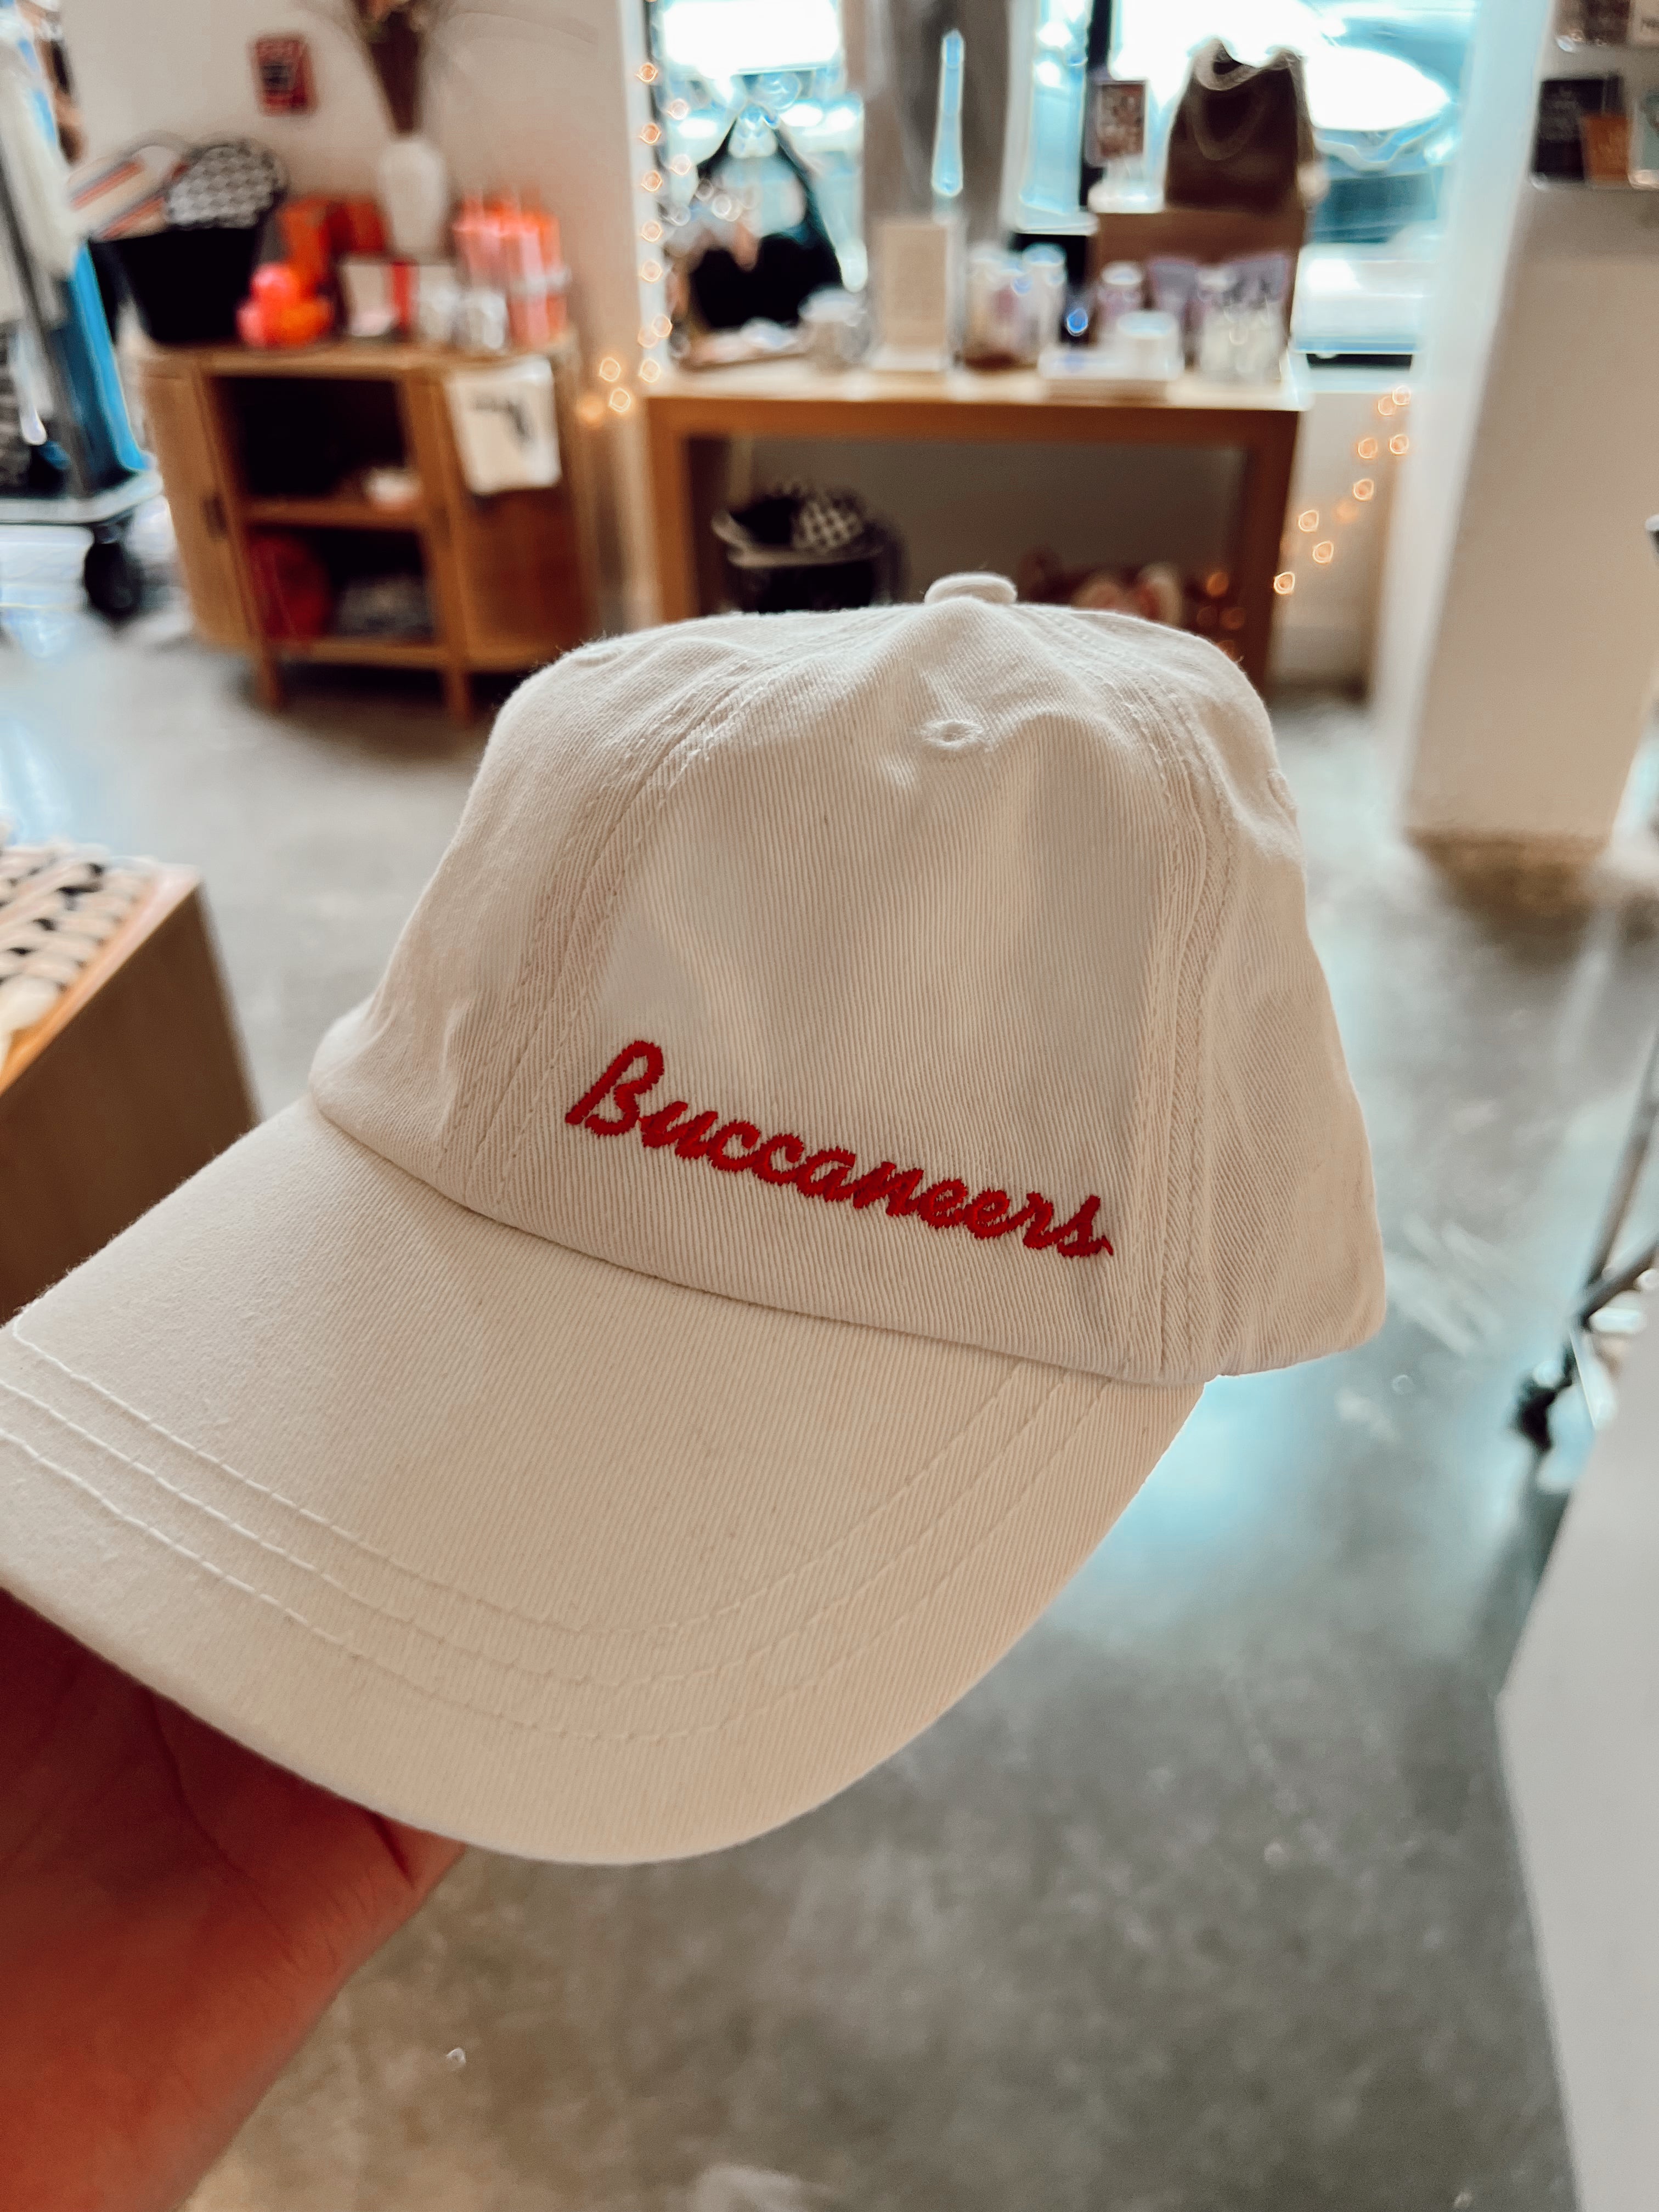 White Buccaneers hat